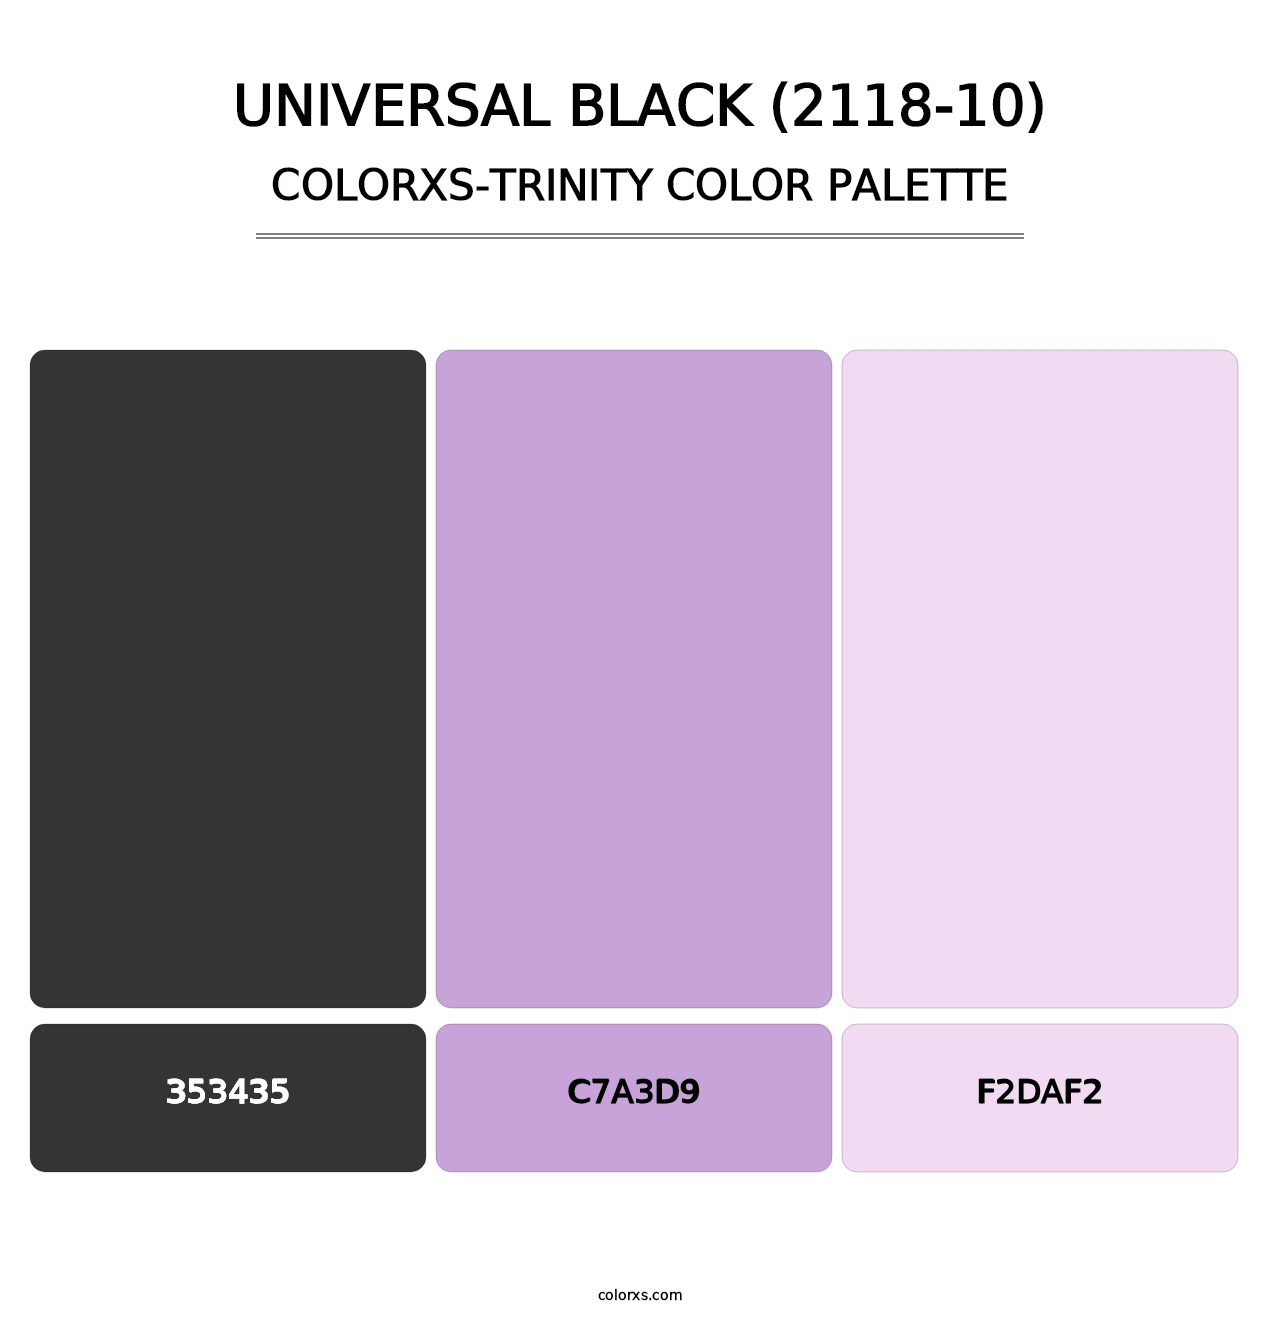 Universal Black (2118-10) - Colorxs Trinity Palette